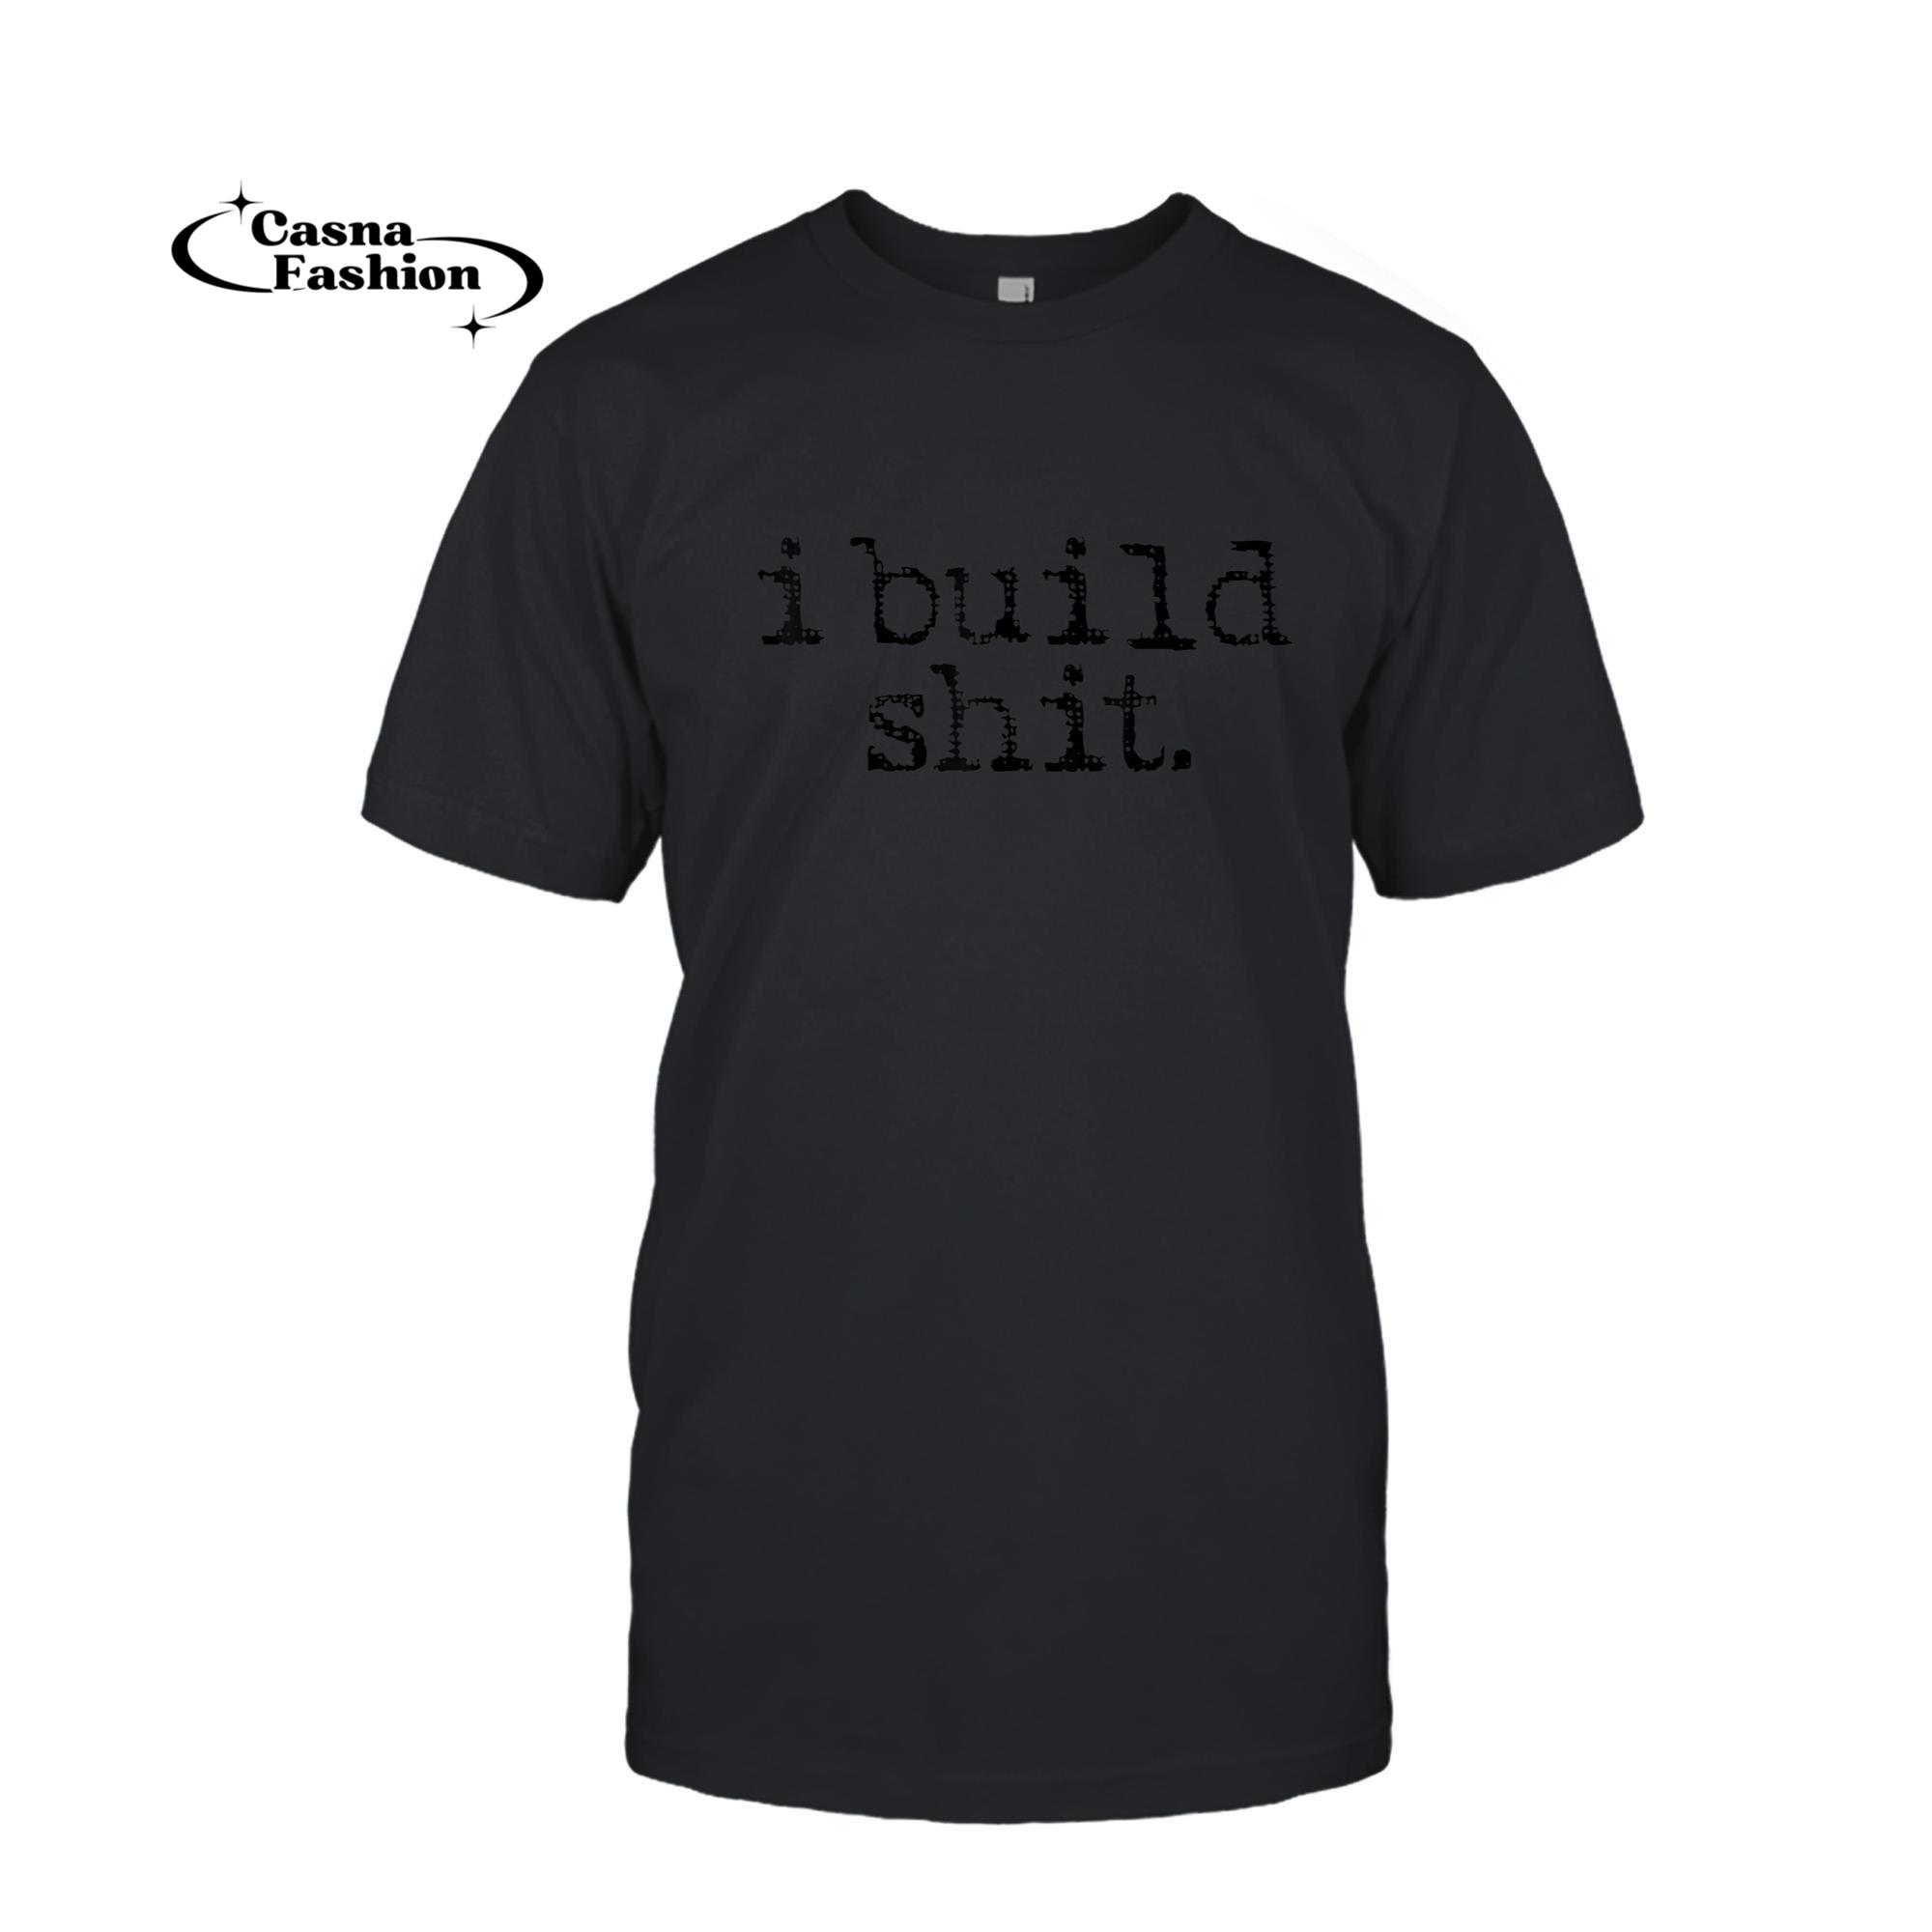 casnafashion_T-shirt_I Build Shit Carpenter Woodworker DIY Craftsman Woodworking T-Shirt_T-shirt_Black